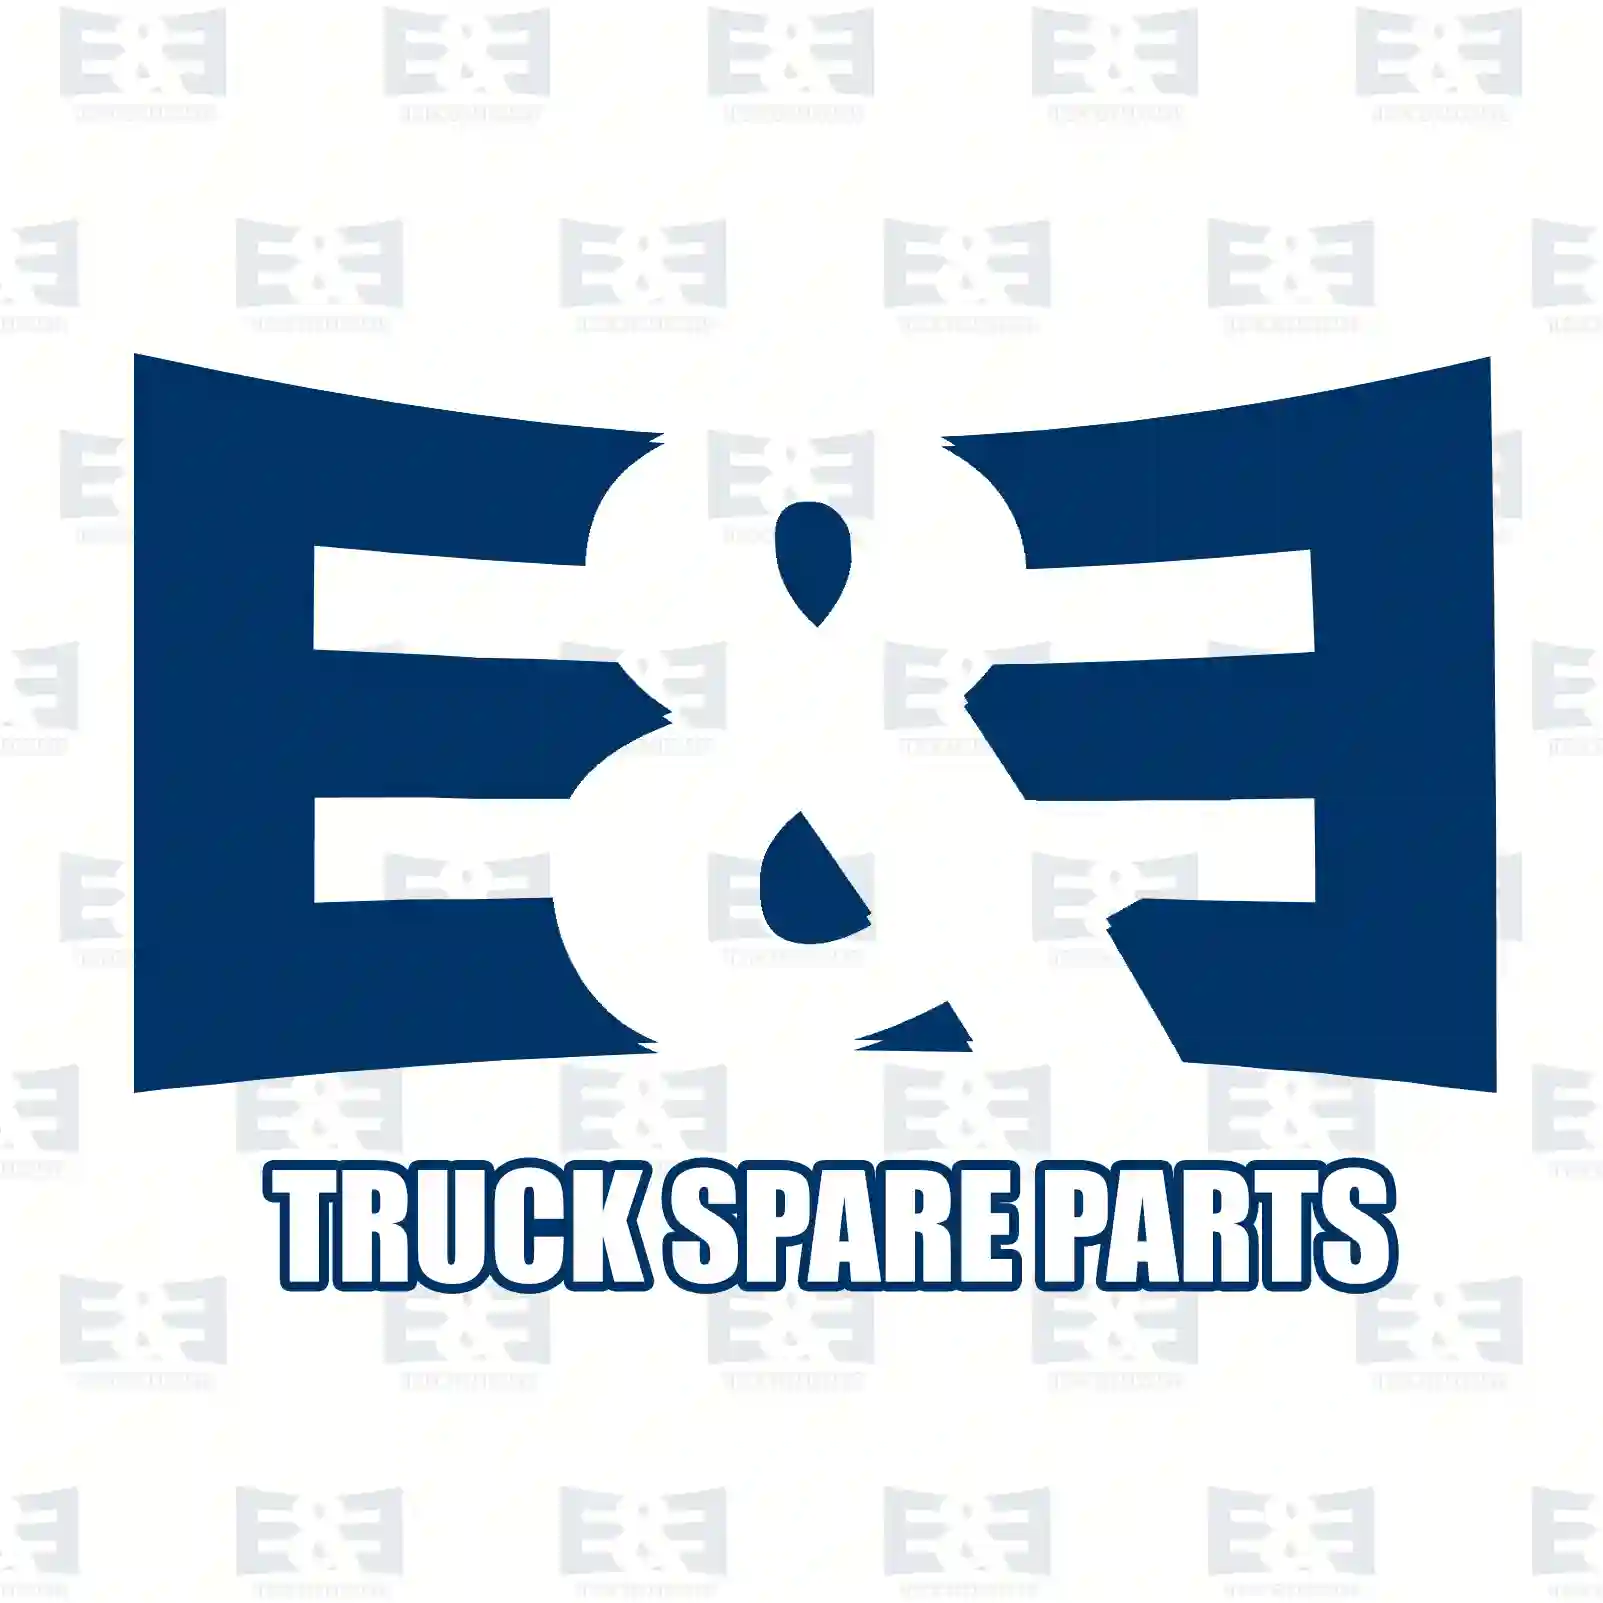 Drive Shaft Flange, EE No 2E2270668 ,  oem no:81443010177, 8144 E&E Truck Spare Parts | Truck Spare Parts, Auotomotive Spare Parts